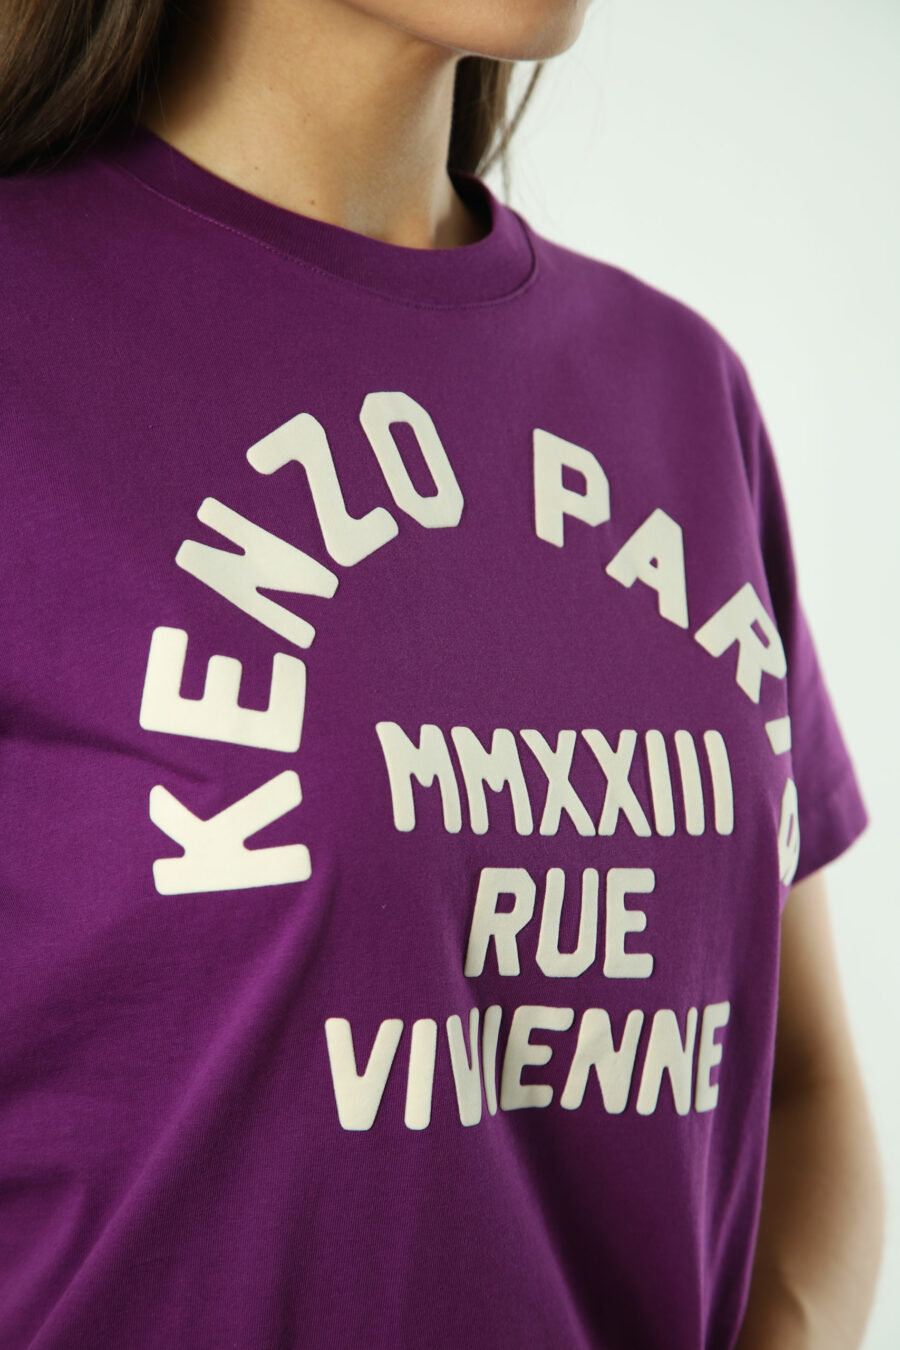 T-shirt lila mit weißem "rue vivienne" maxilogo - Fotos 1356